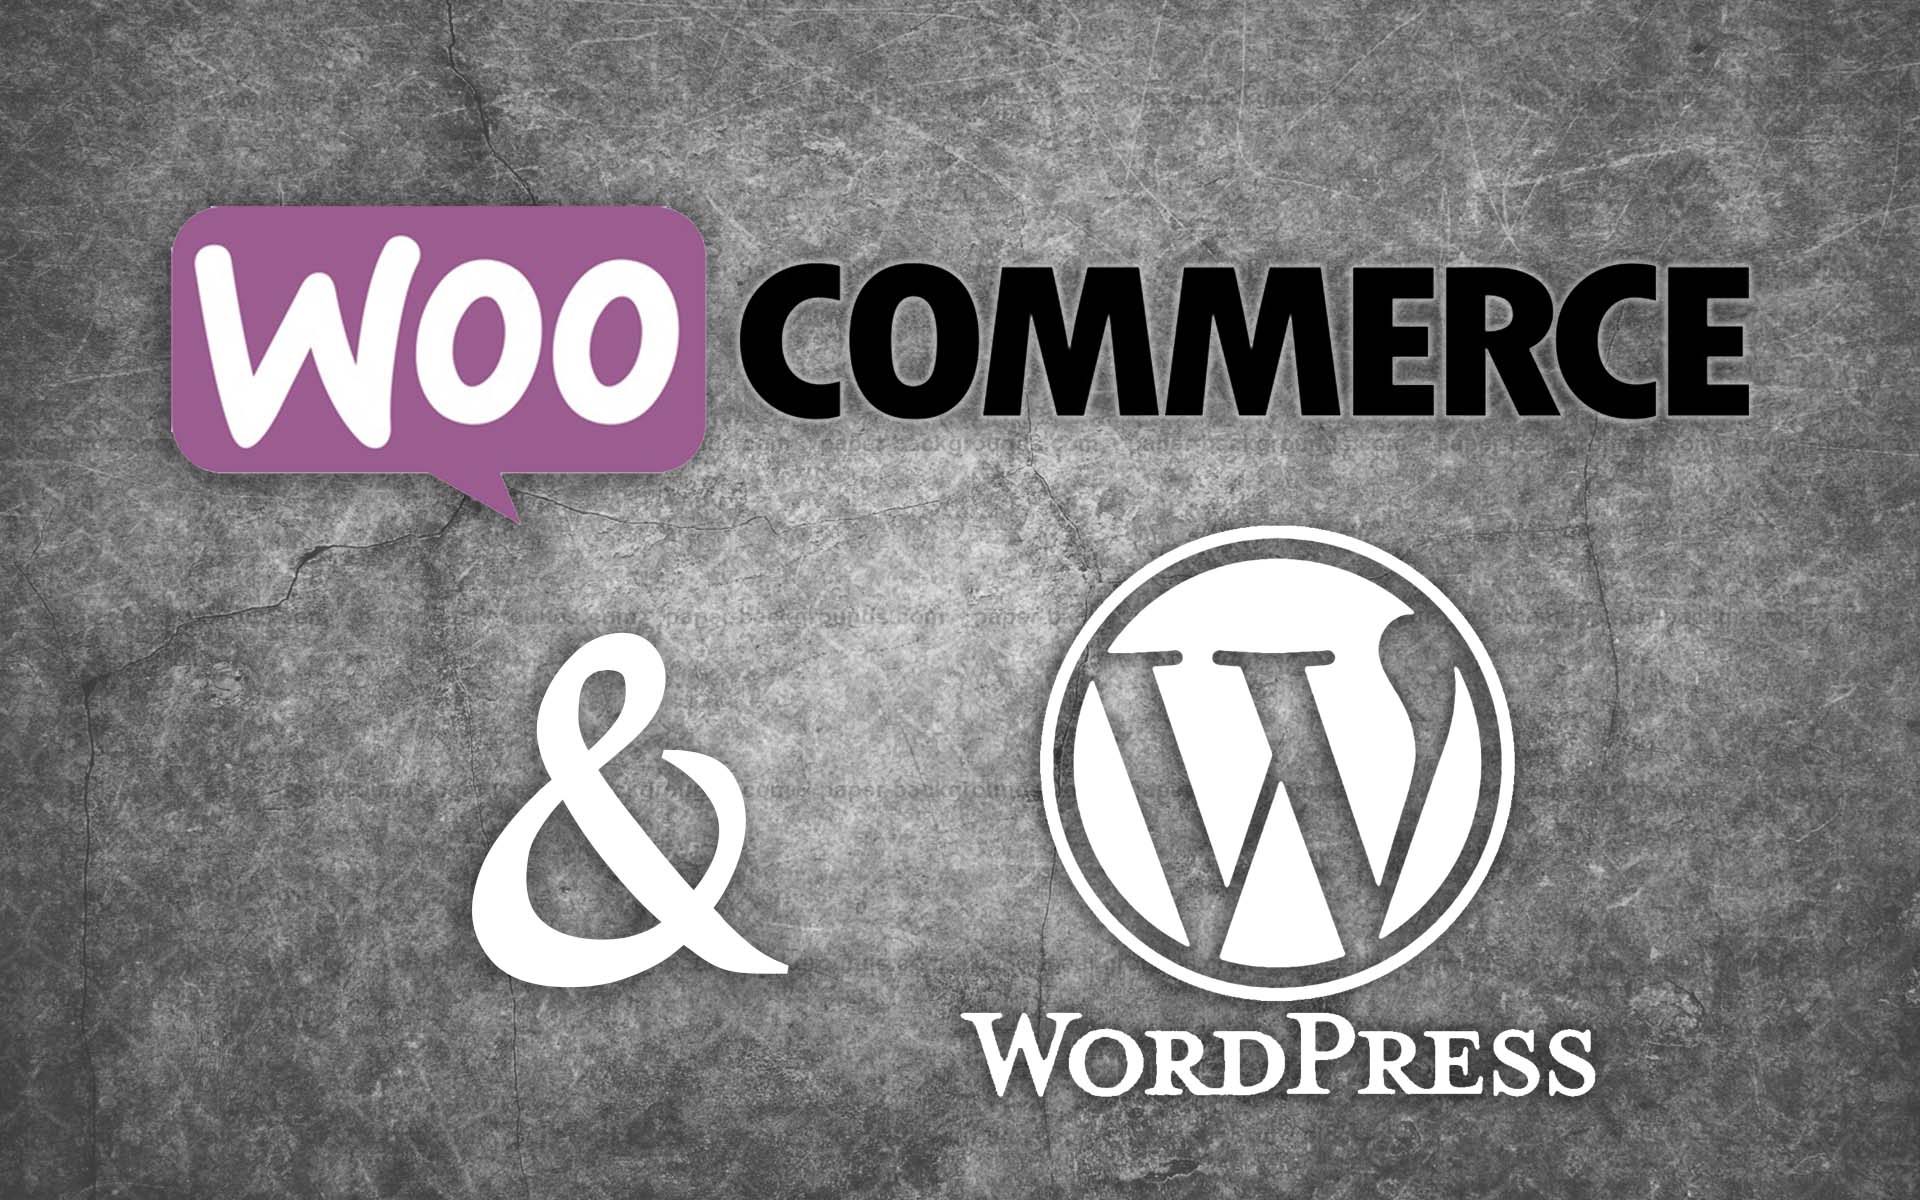 WordPress and WooCommerce - Udiwonder